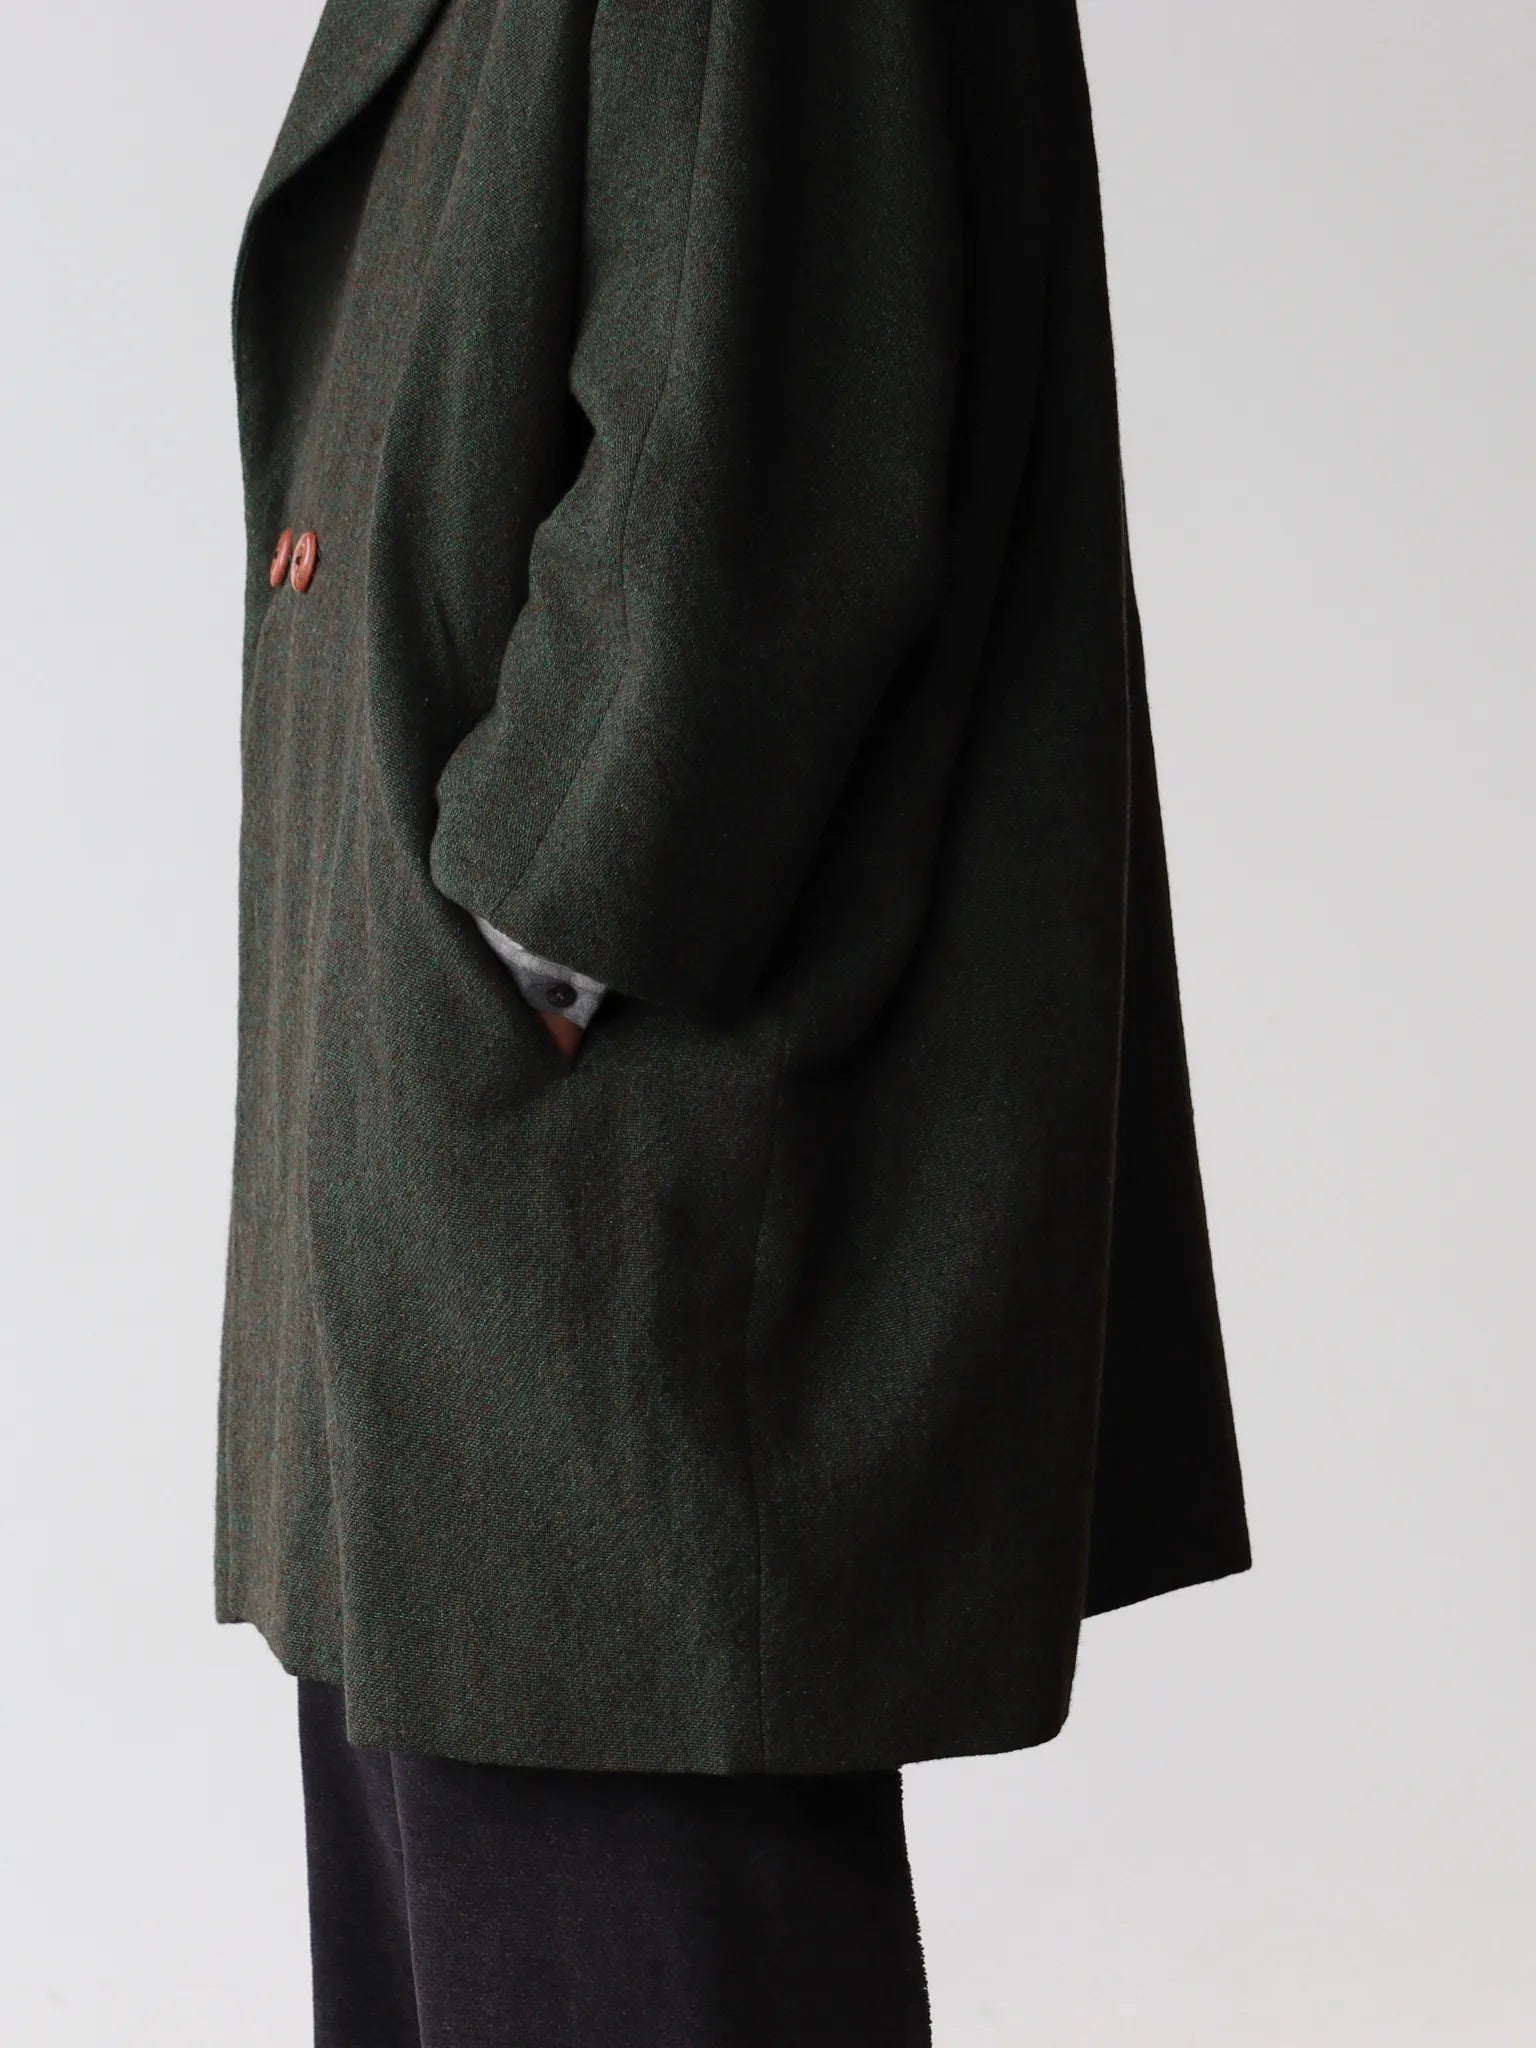 amachi-dolman-sleeve-4button-coat-verdigris-green-7